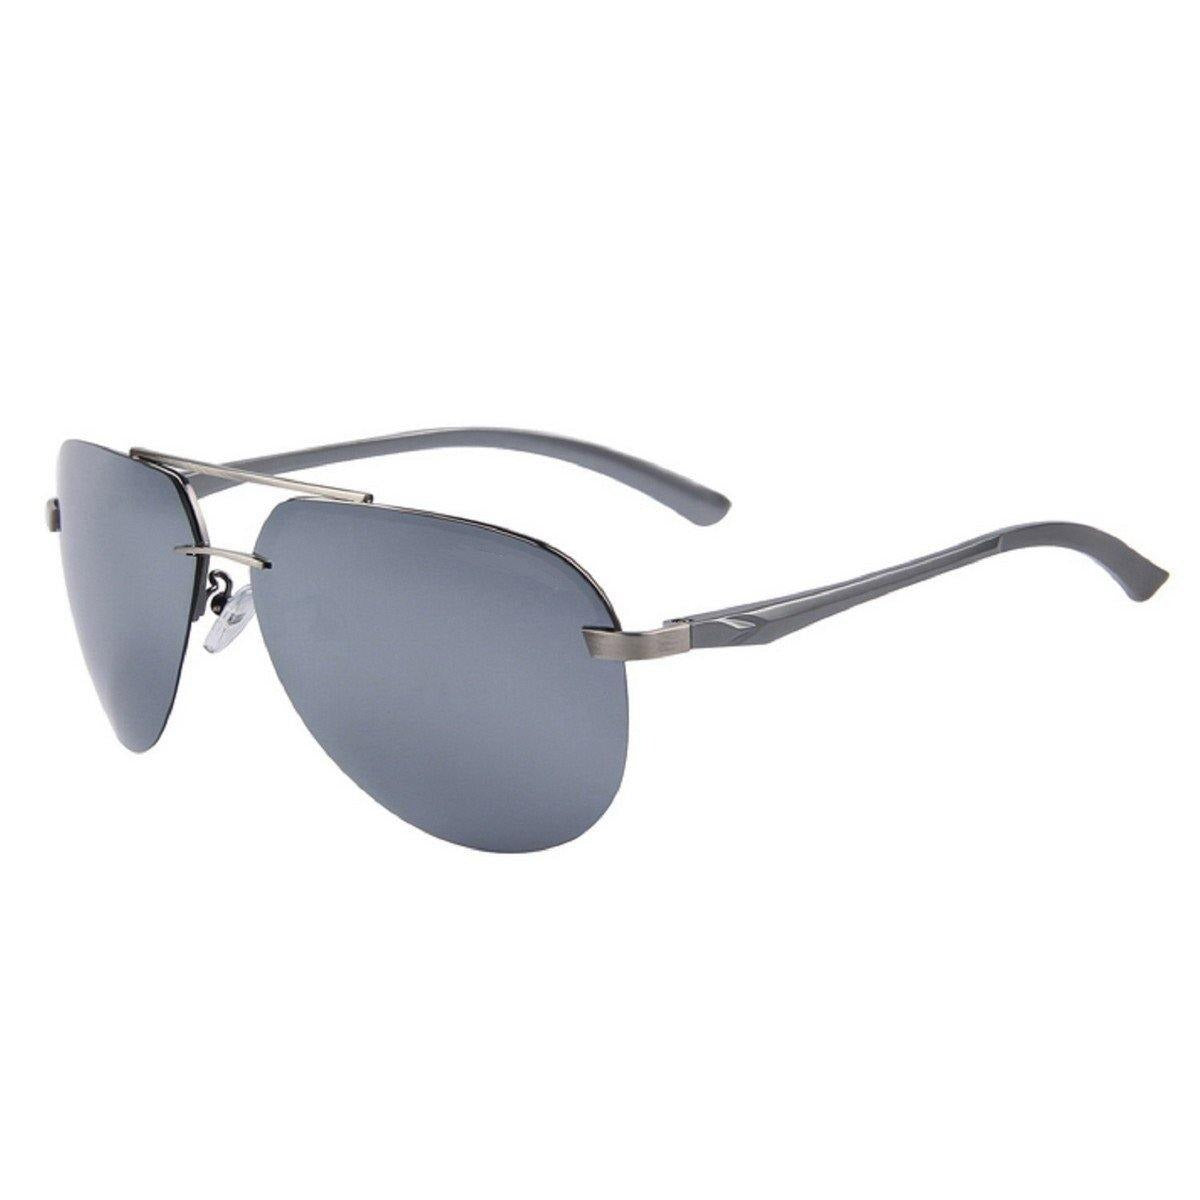 Buy HD Vision Silver Mirror Polarized Aviator Sunglasses - Glasses India Online in India